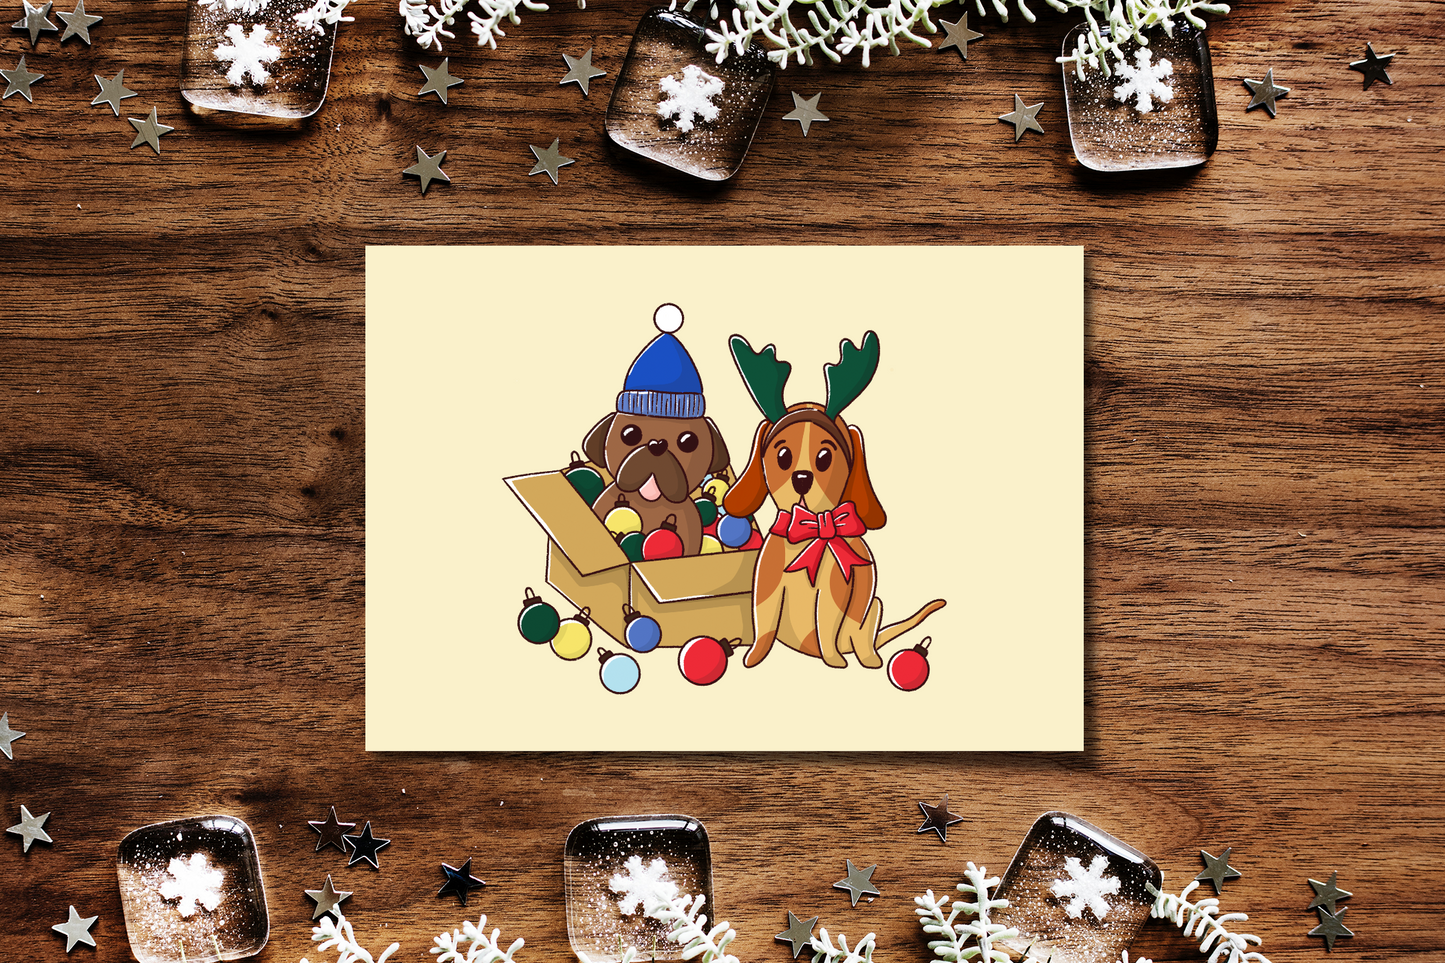 Merry dogmas, dog lover chirstmas card